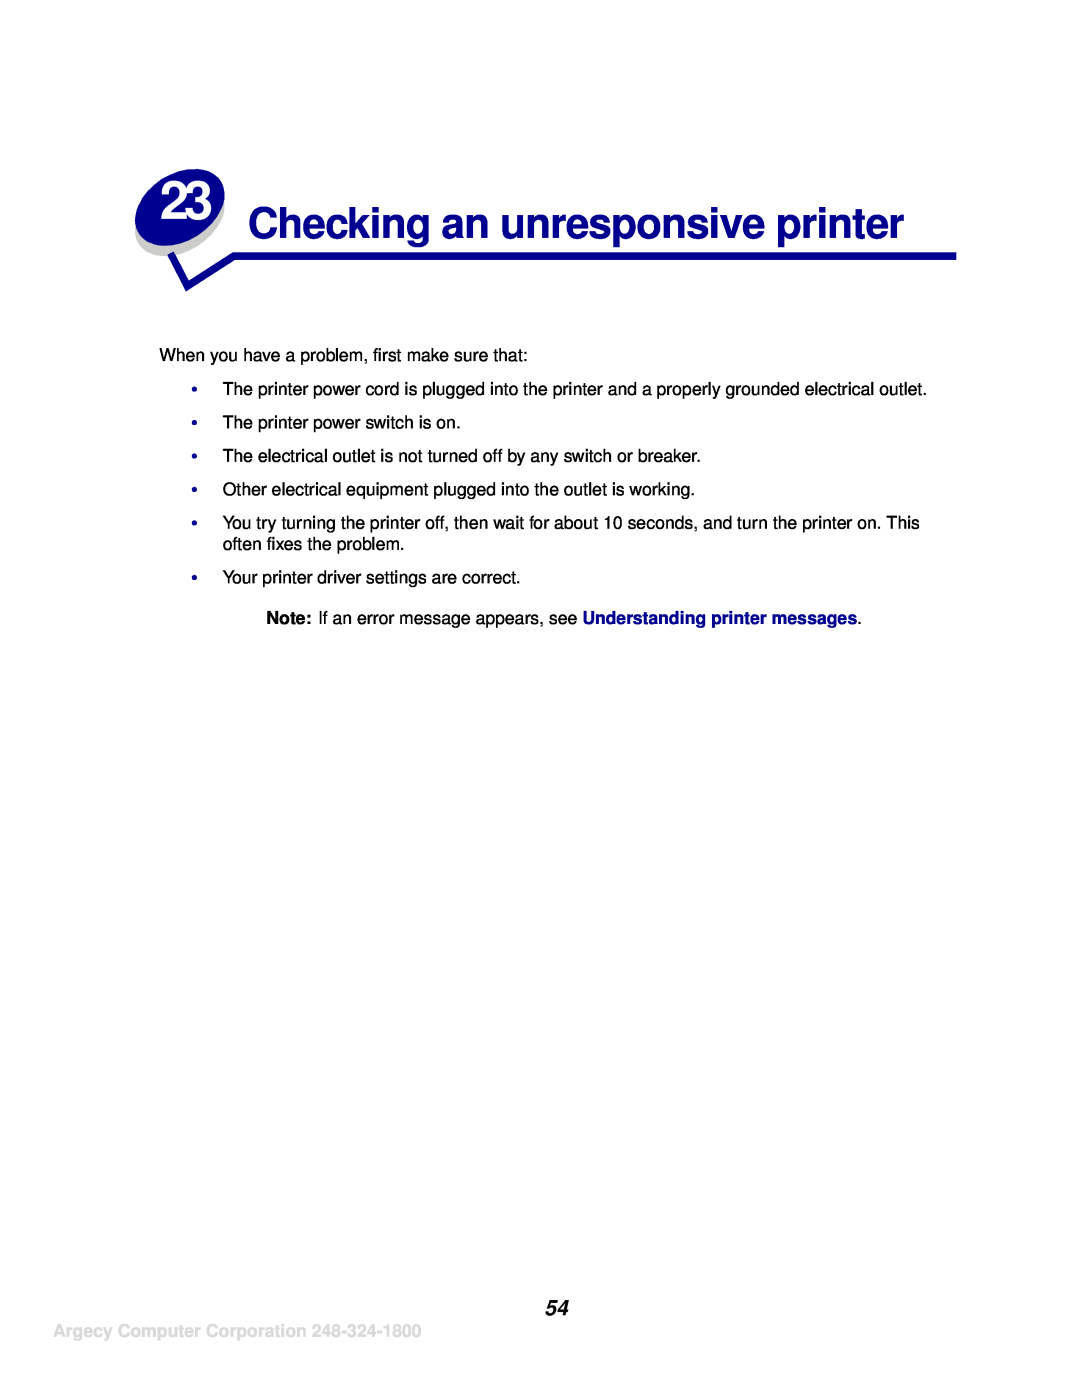 IBM 1125, 1120 manual Checking an unresponsive printer, Argecy Computer Corporation 